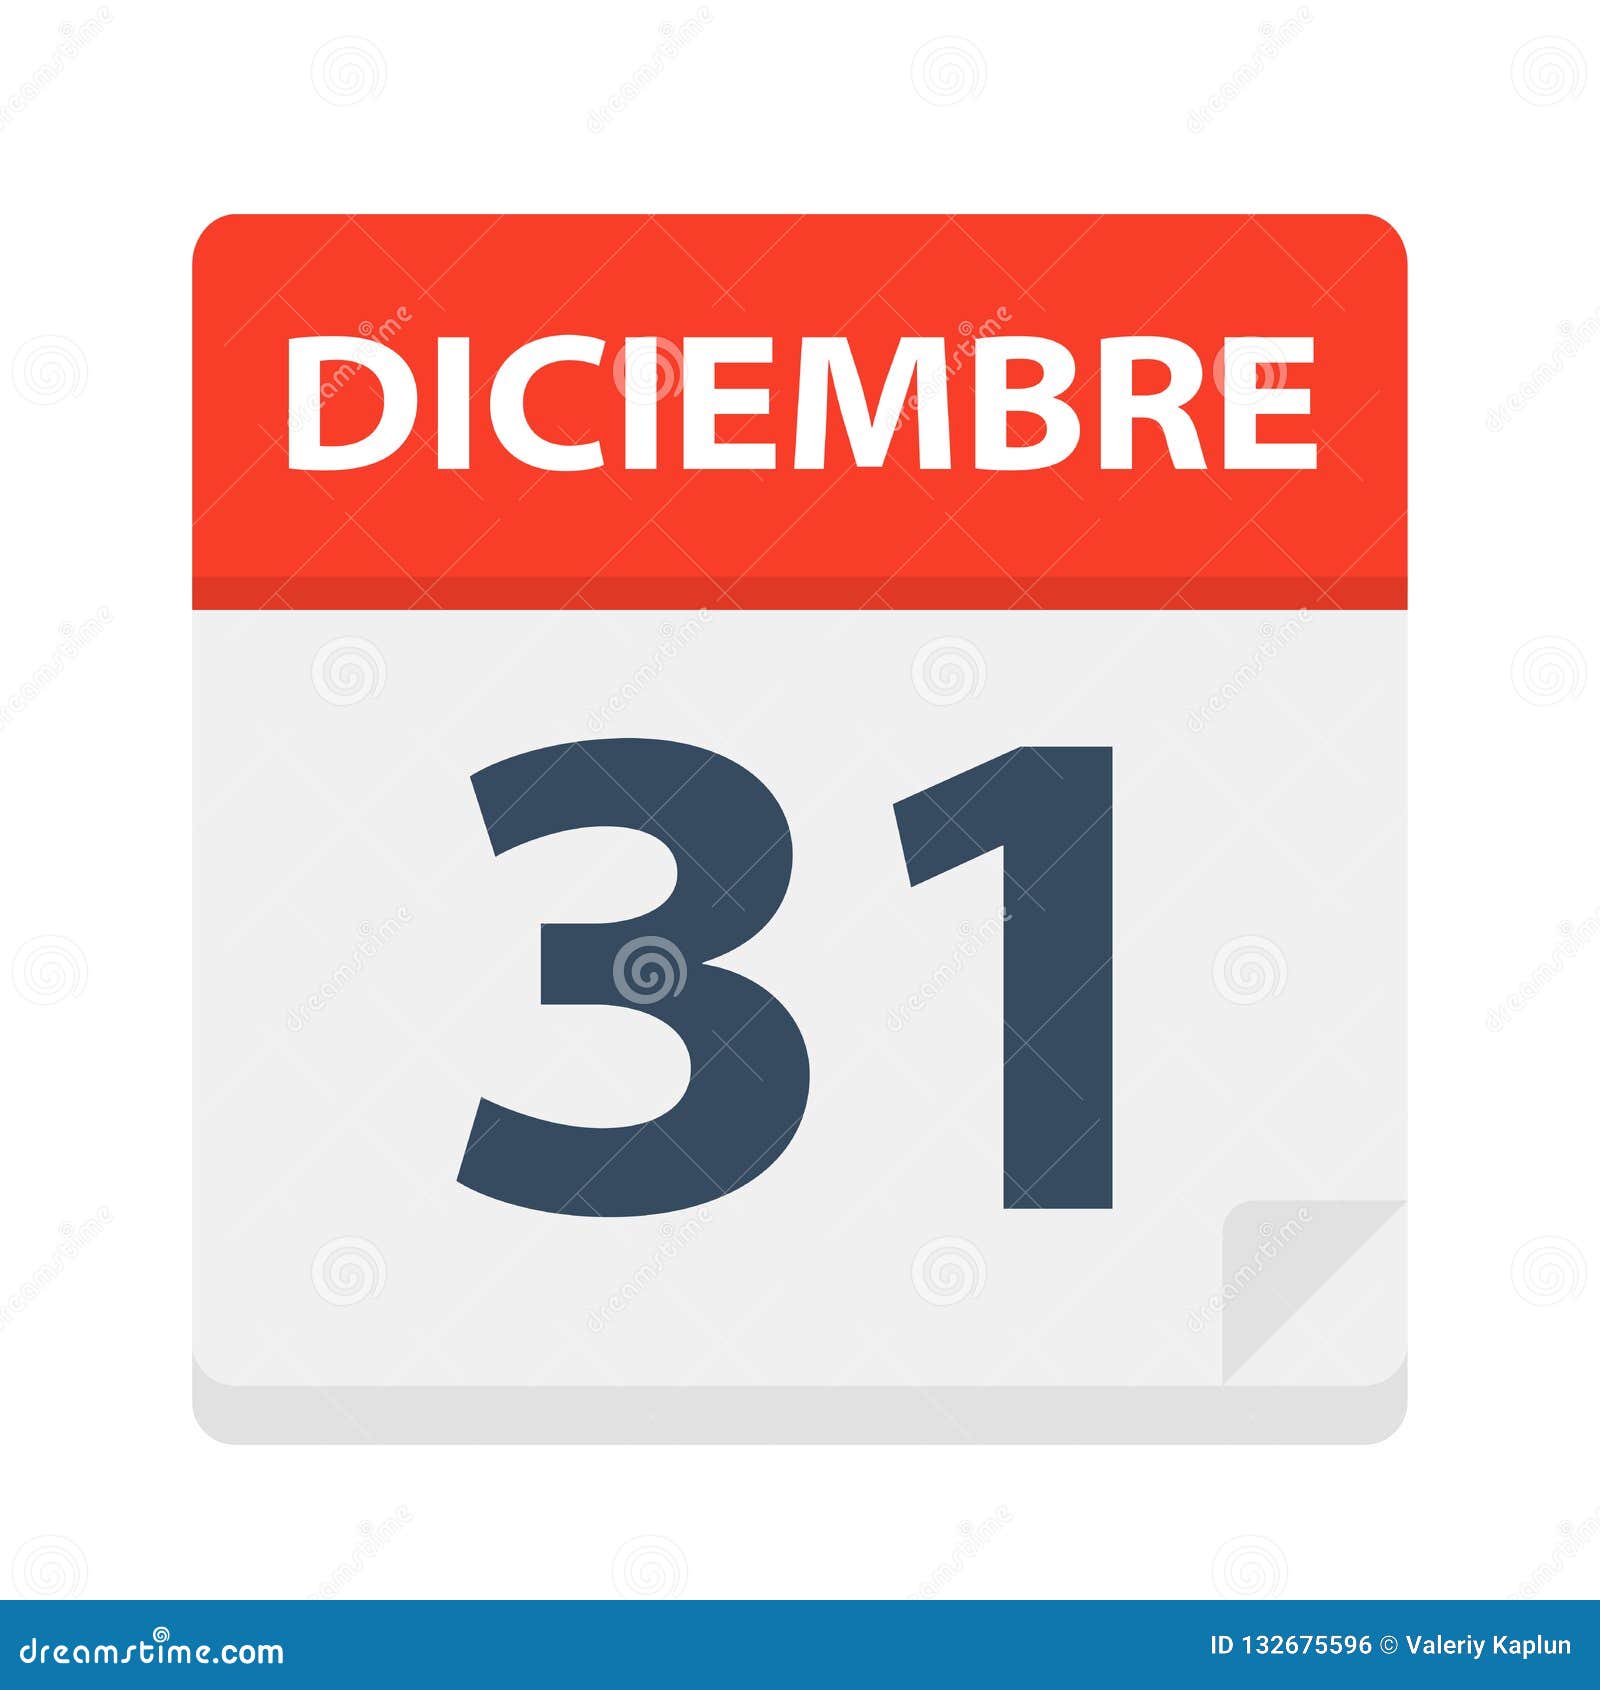 diciembre 31 - calendar icon - december 31.   of spanish calendar leaf